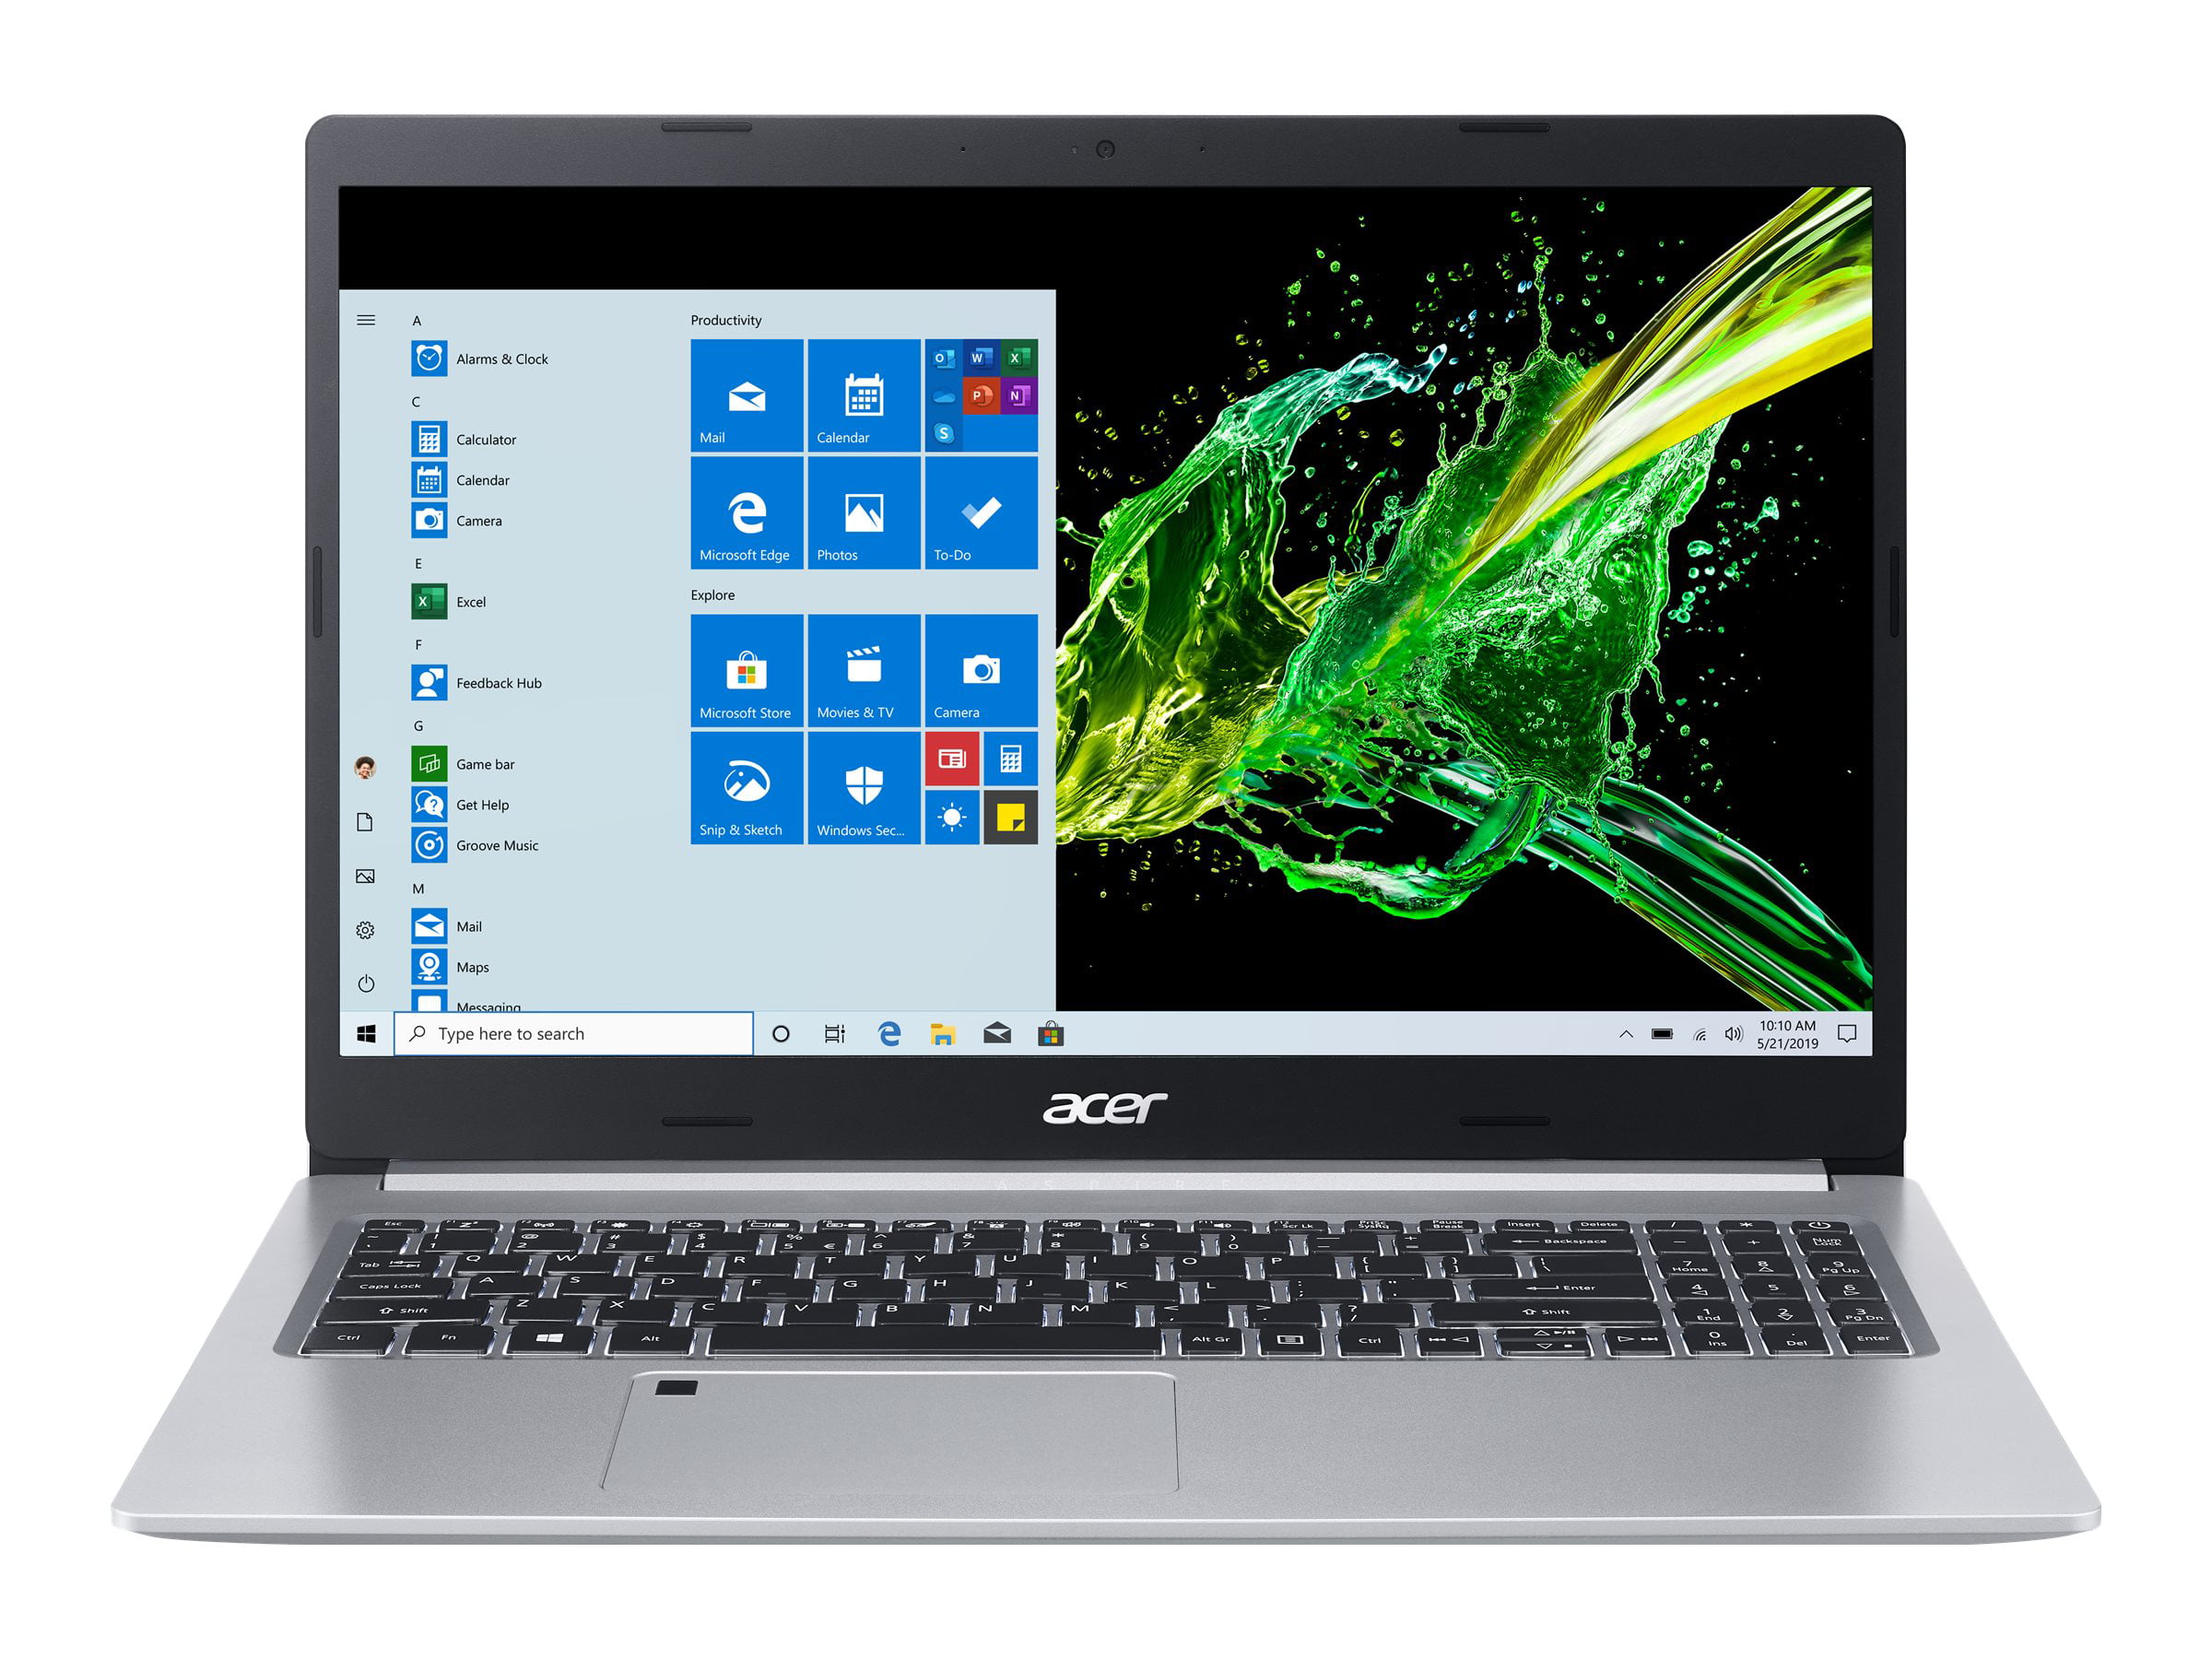 Acer Aspire 5 A515-55-75NC - Core i7 1065G7 / 1.3 GHz - Win 10 Home 64-bit  - 8 GB RAM - 512 GB SSD - 15.6